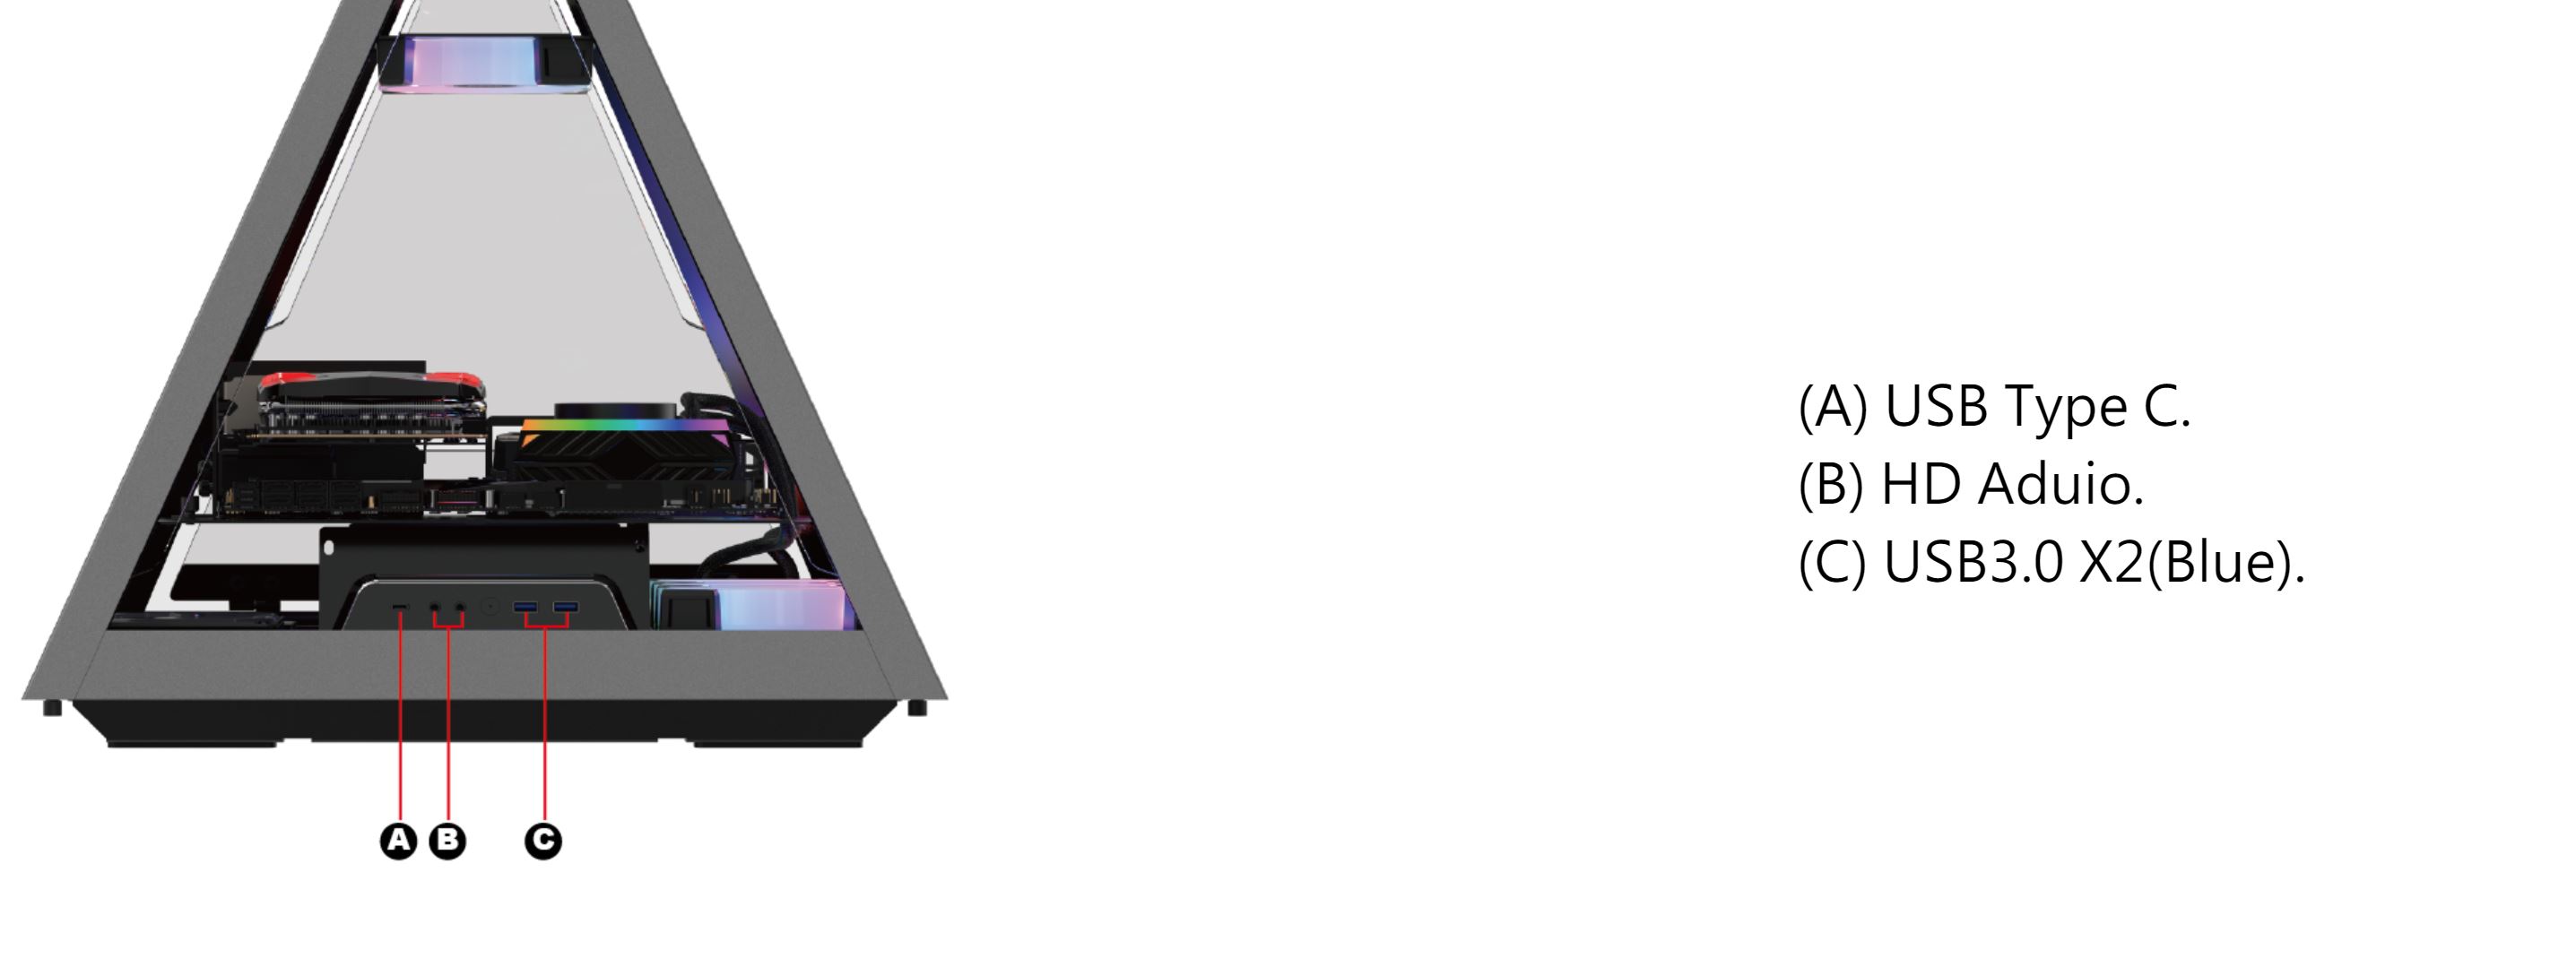 AZZA Pyramid 804 ARGB Tempered Glass ATX Case